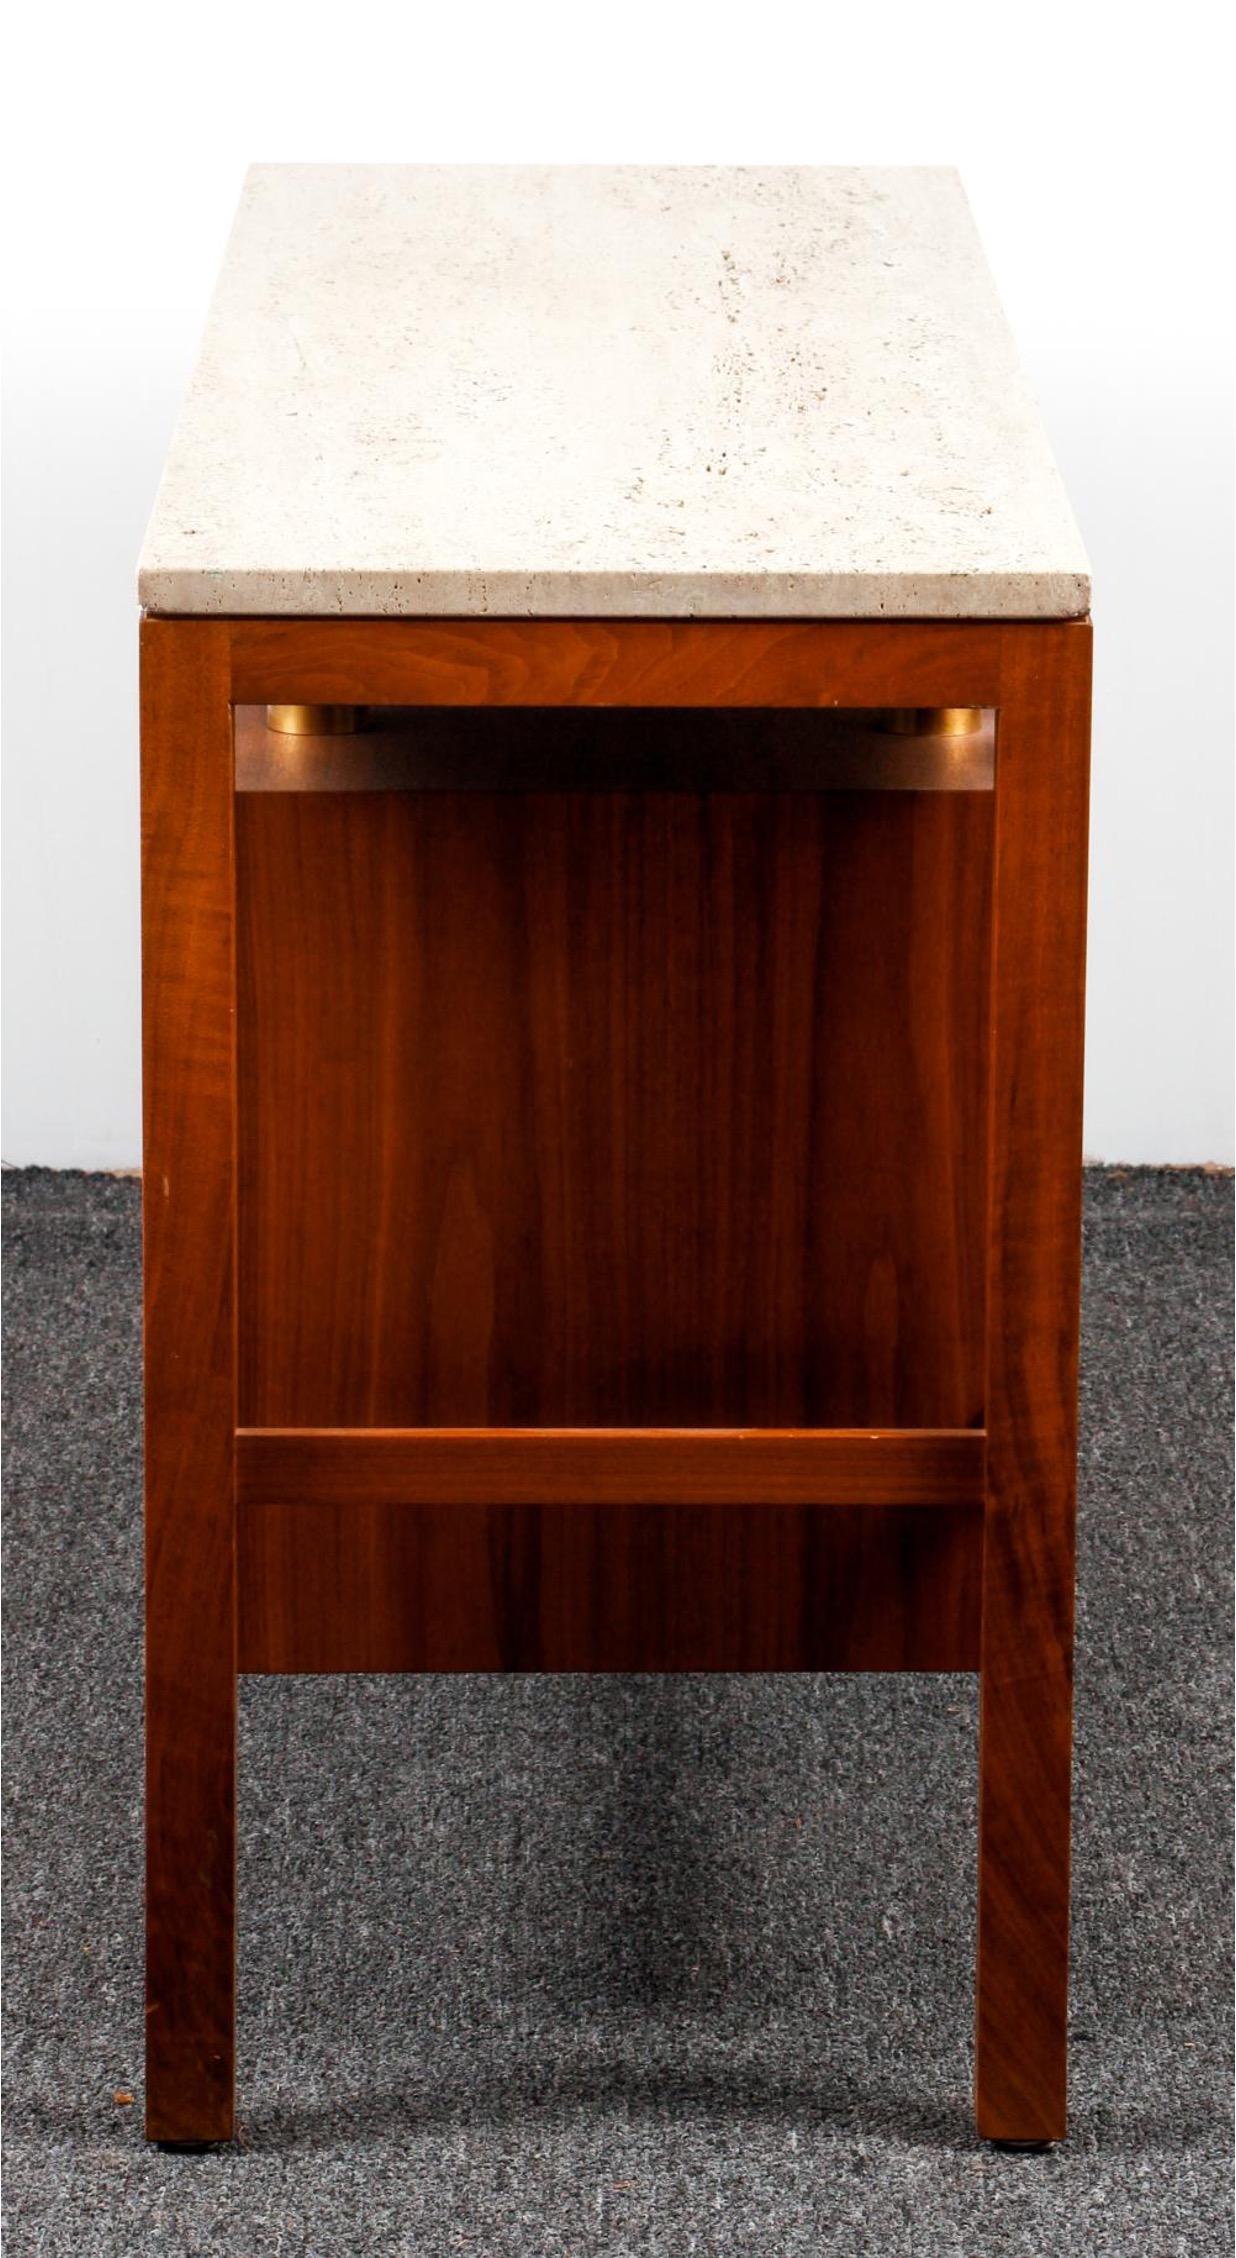 Vladimir Kagan, 1961 Mid-Century Modern Sideboards / Cabinets Original Receipts In Fair Condition For Sale In North Miami, FL